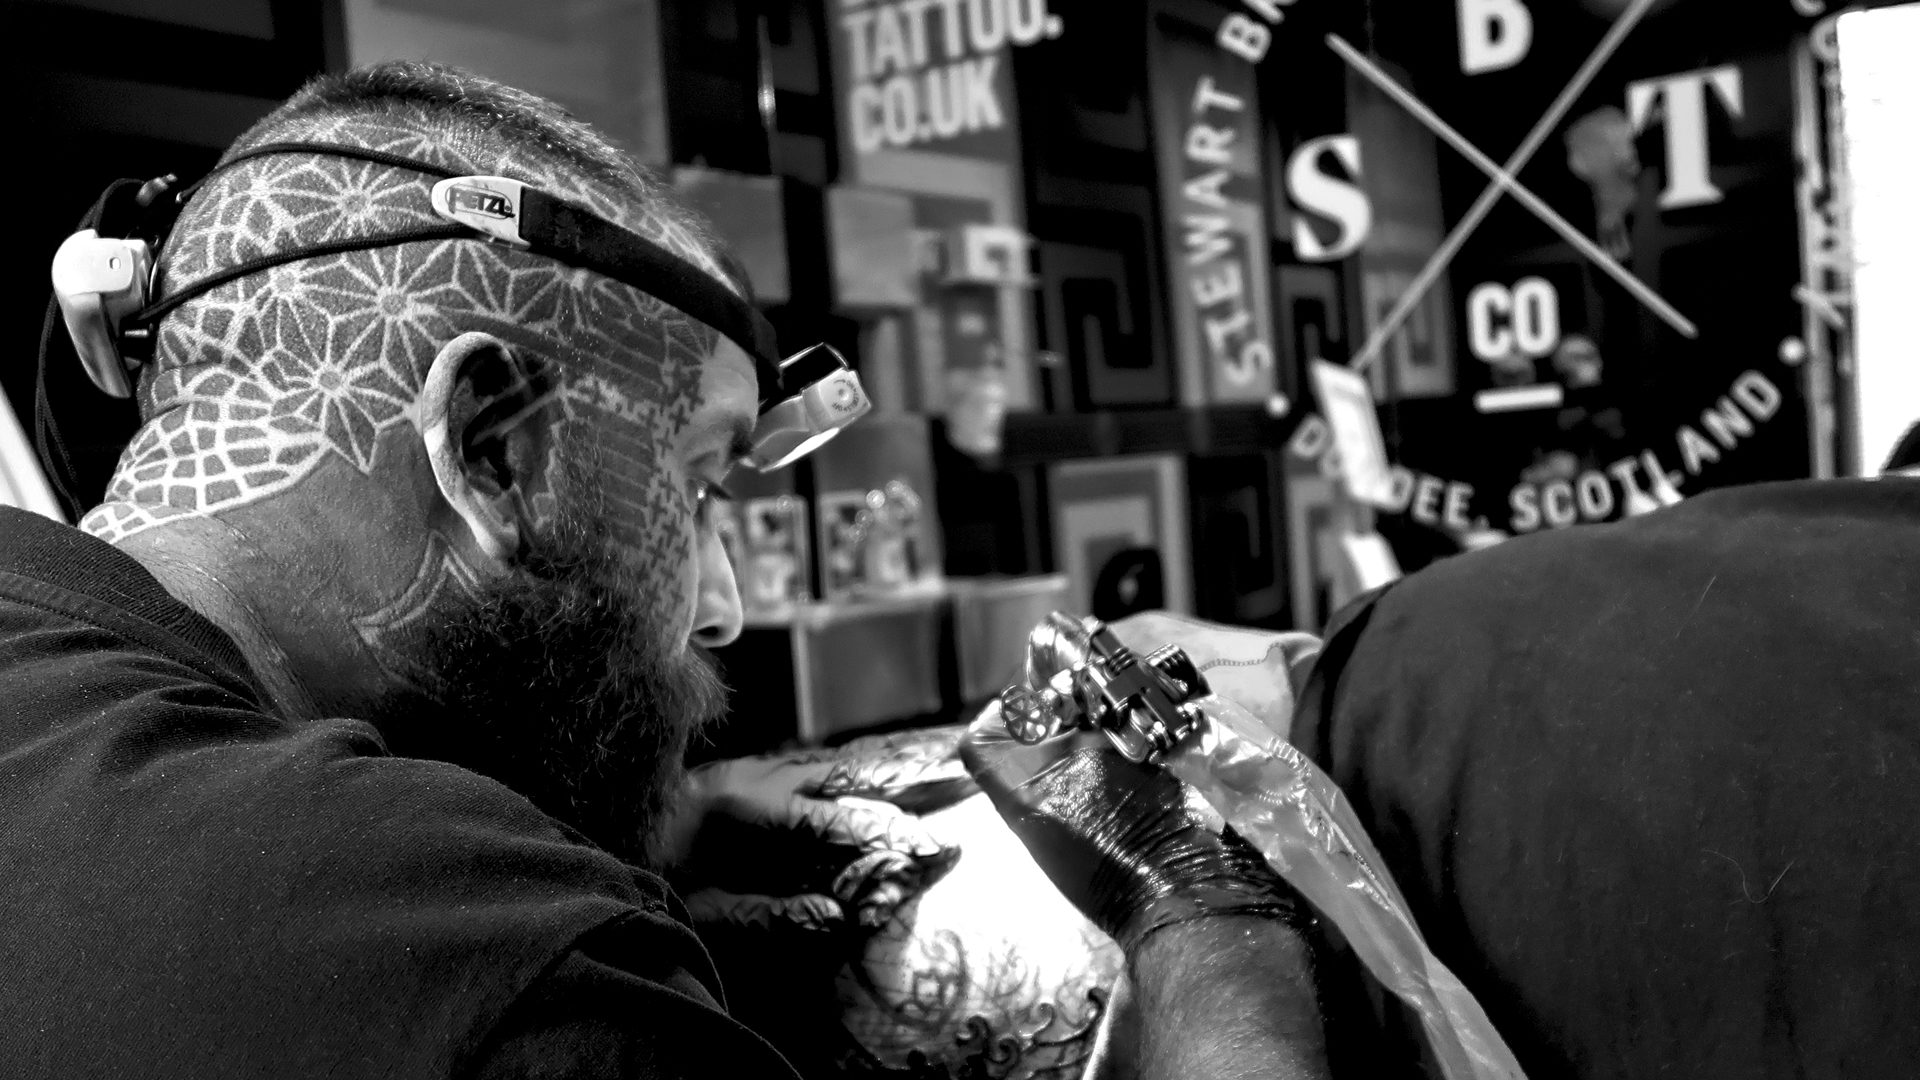 Gallery - Stewart Brothers Tattoo